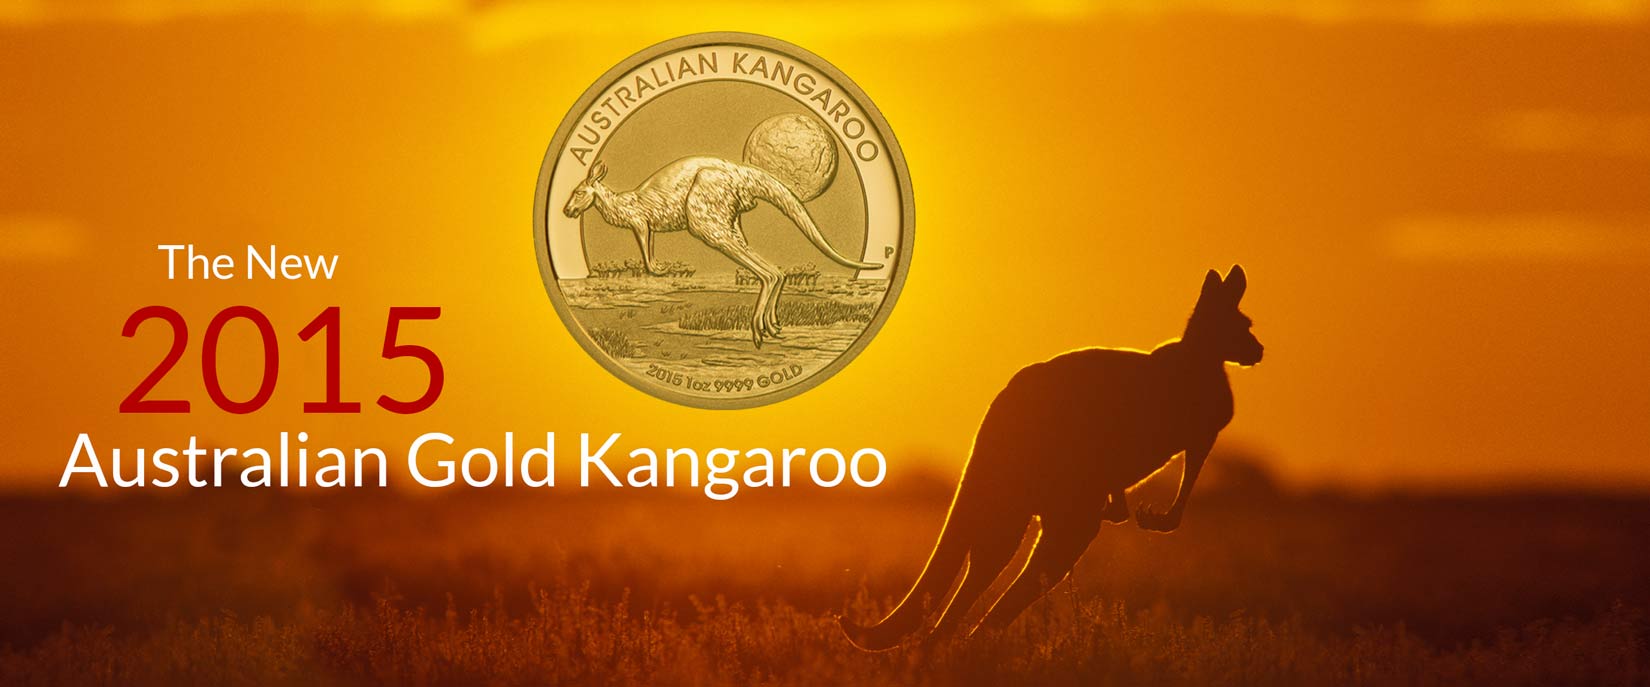 The New 2015 Gold Kangaroo is here!